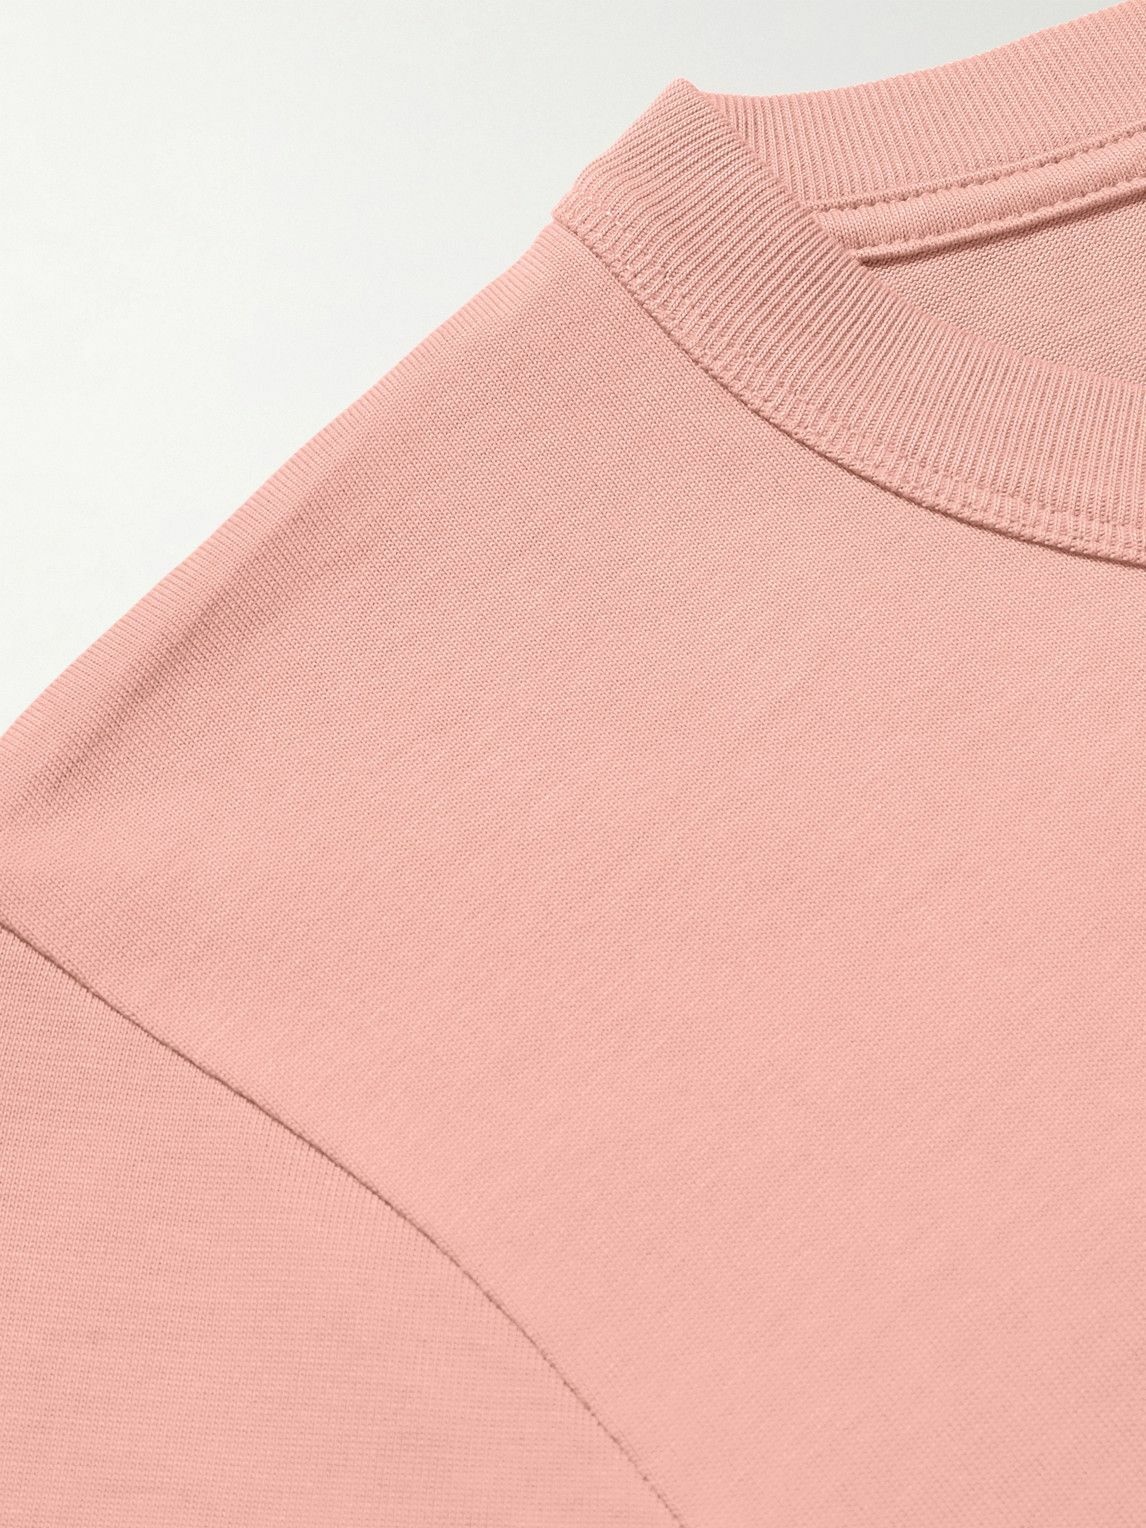 CDLP - Lyocell and Pima Cotton-Blend Jersey T-Shirt - Pink CDLP